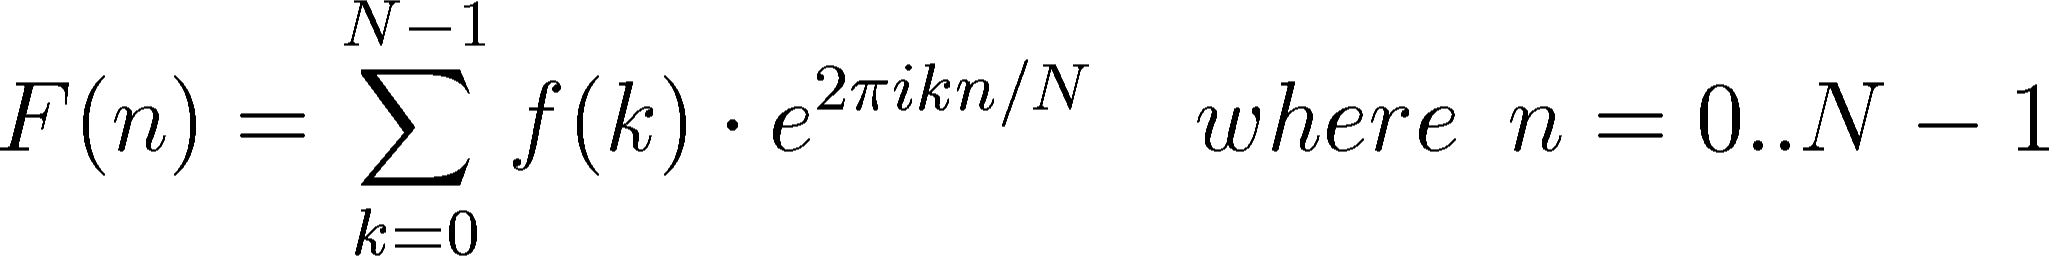 \begin{displaymath}
F(n)=\sum_{k=0}^{N-1}f(k)\cdot e^{2\pi ikn/N}\quad
where\hspace{0.2cm}n=0..N-1
\end{displaymath}